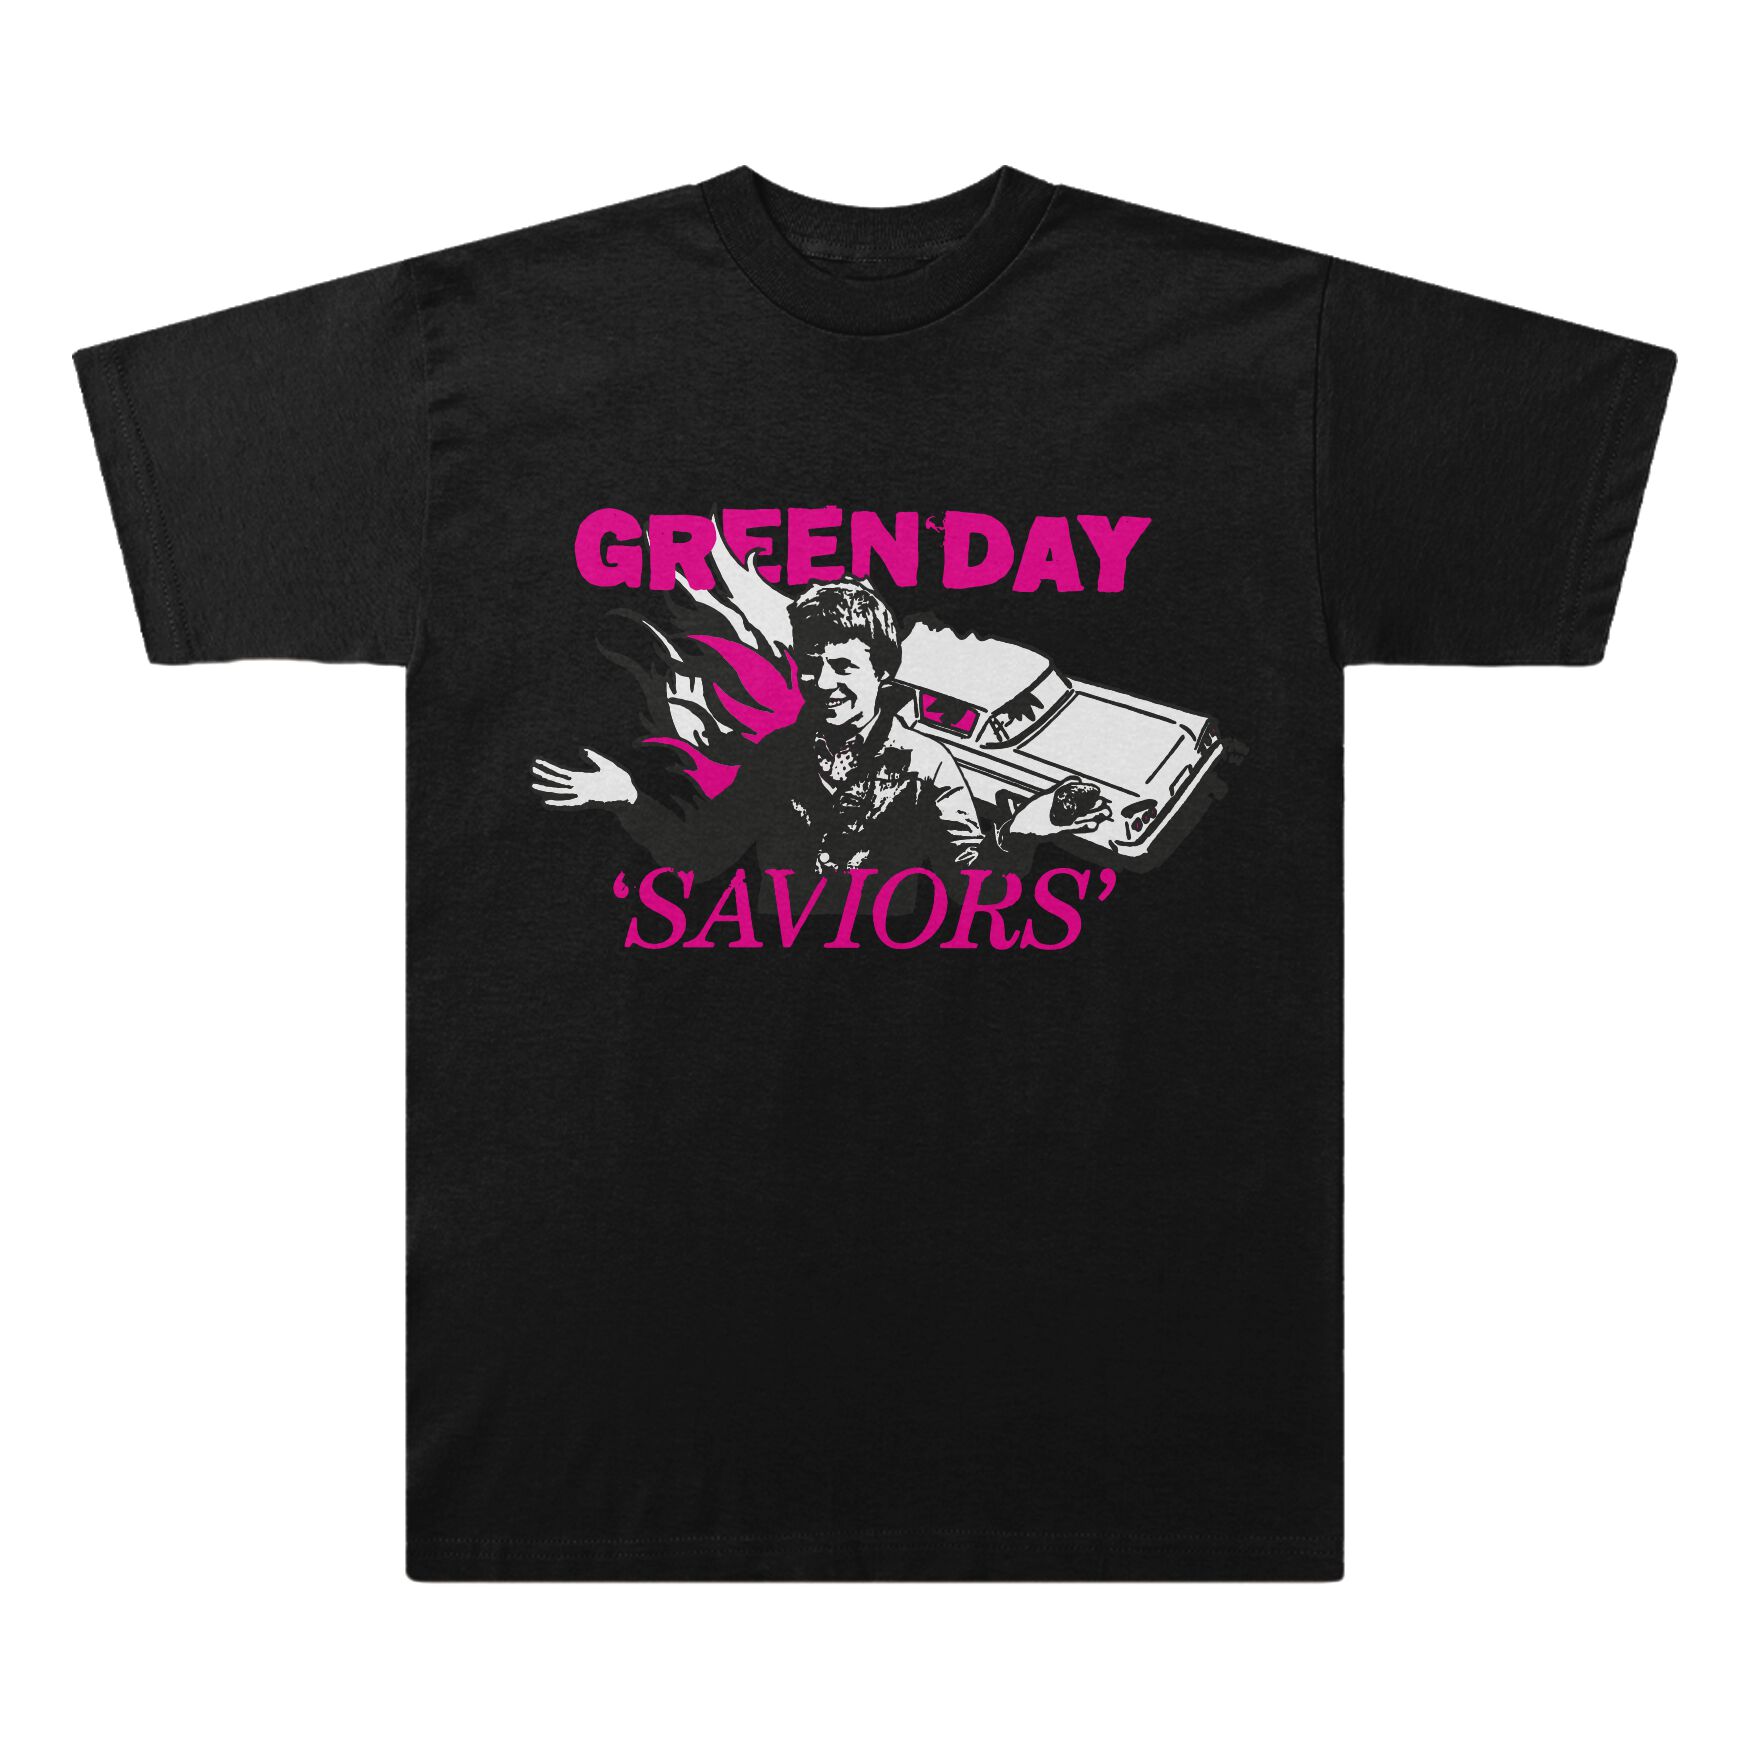 Green Day Saviors Illustration T-Shirt schwarz in S